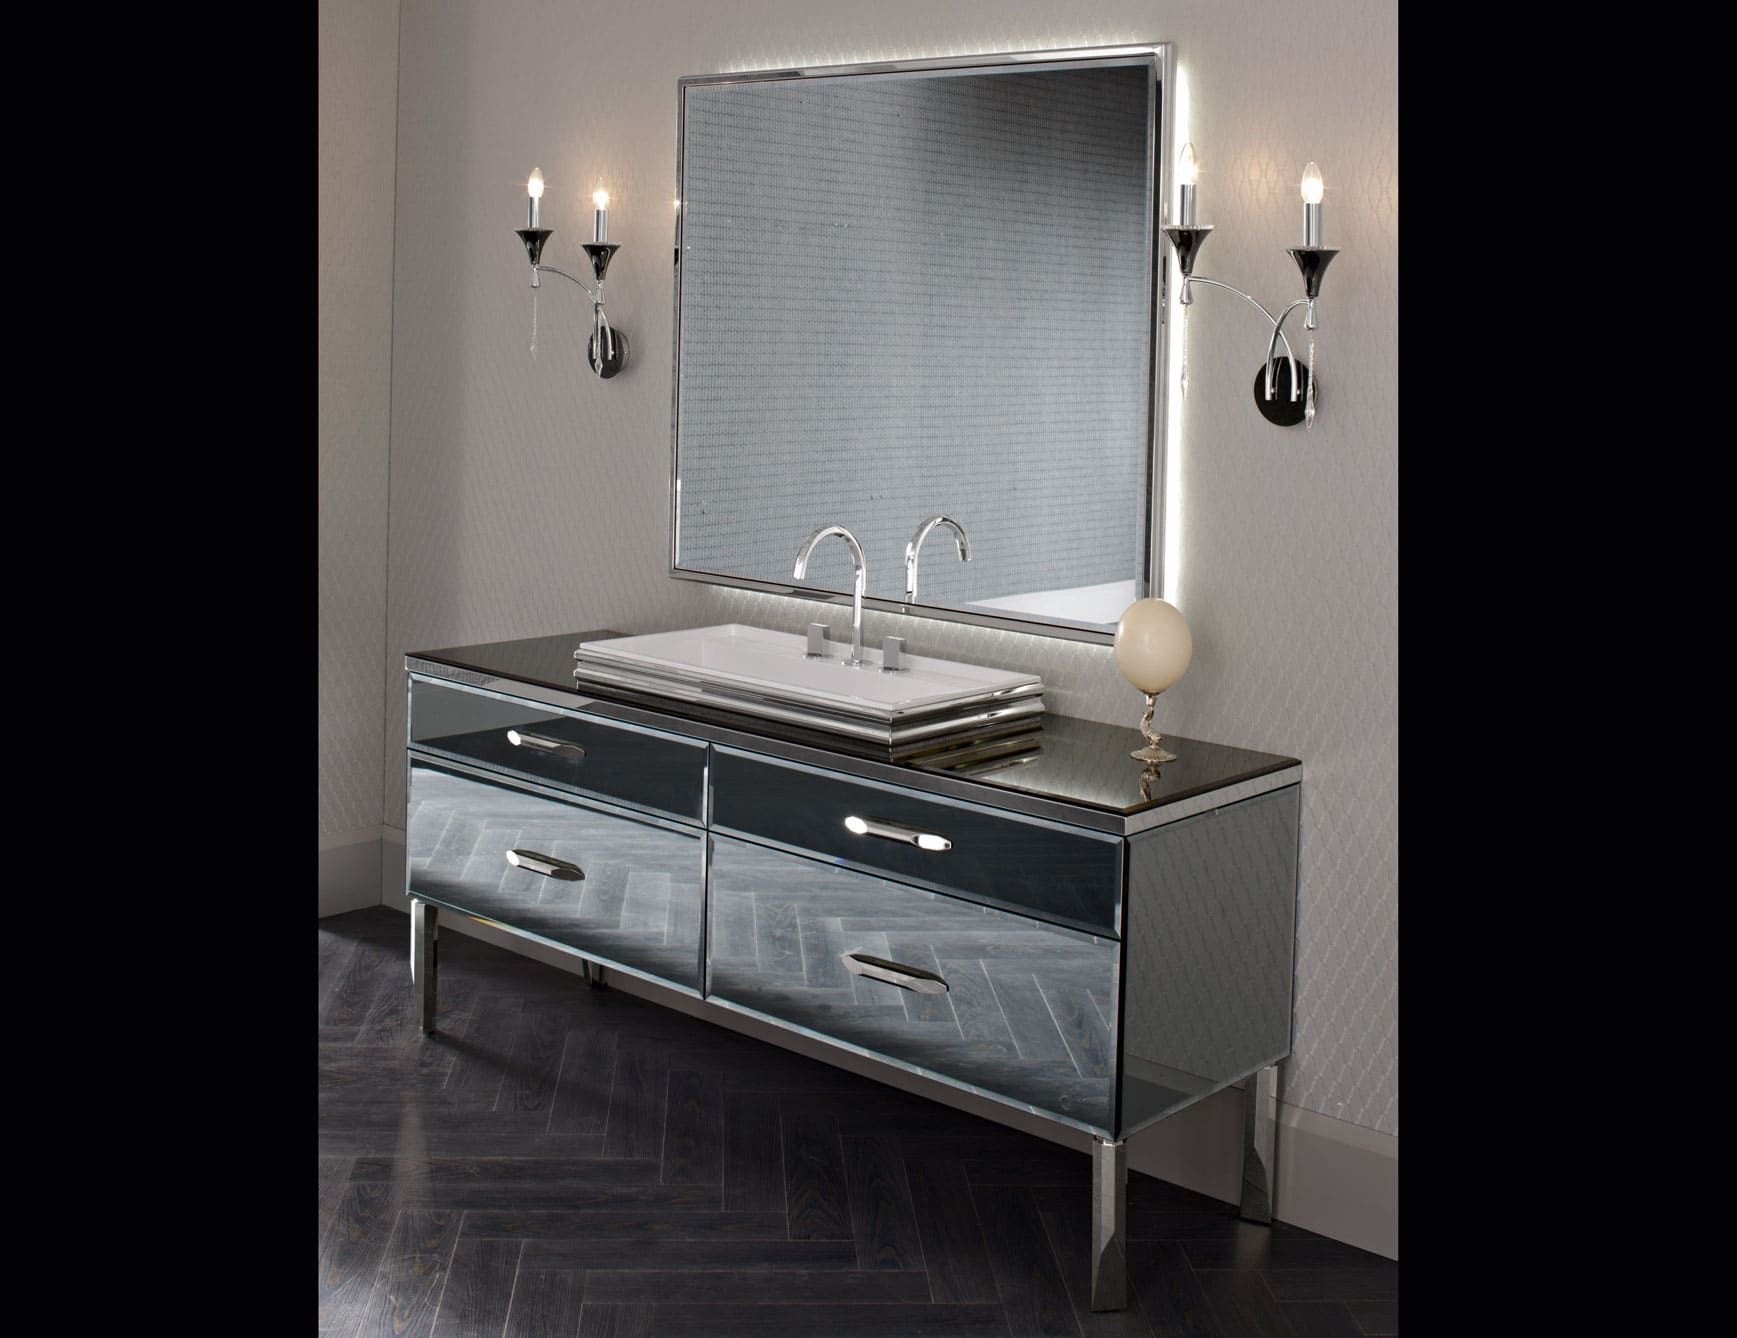 Hilton contemporary Italian bathroom vanity with grey glass